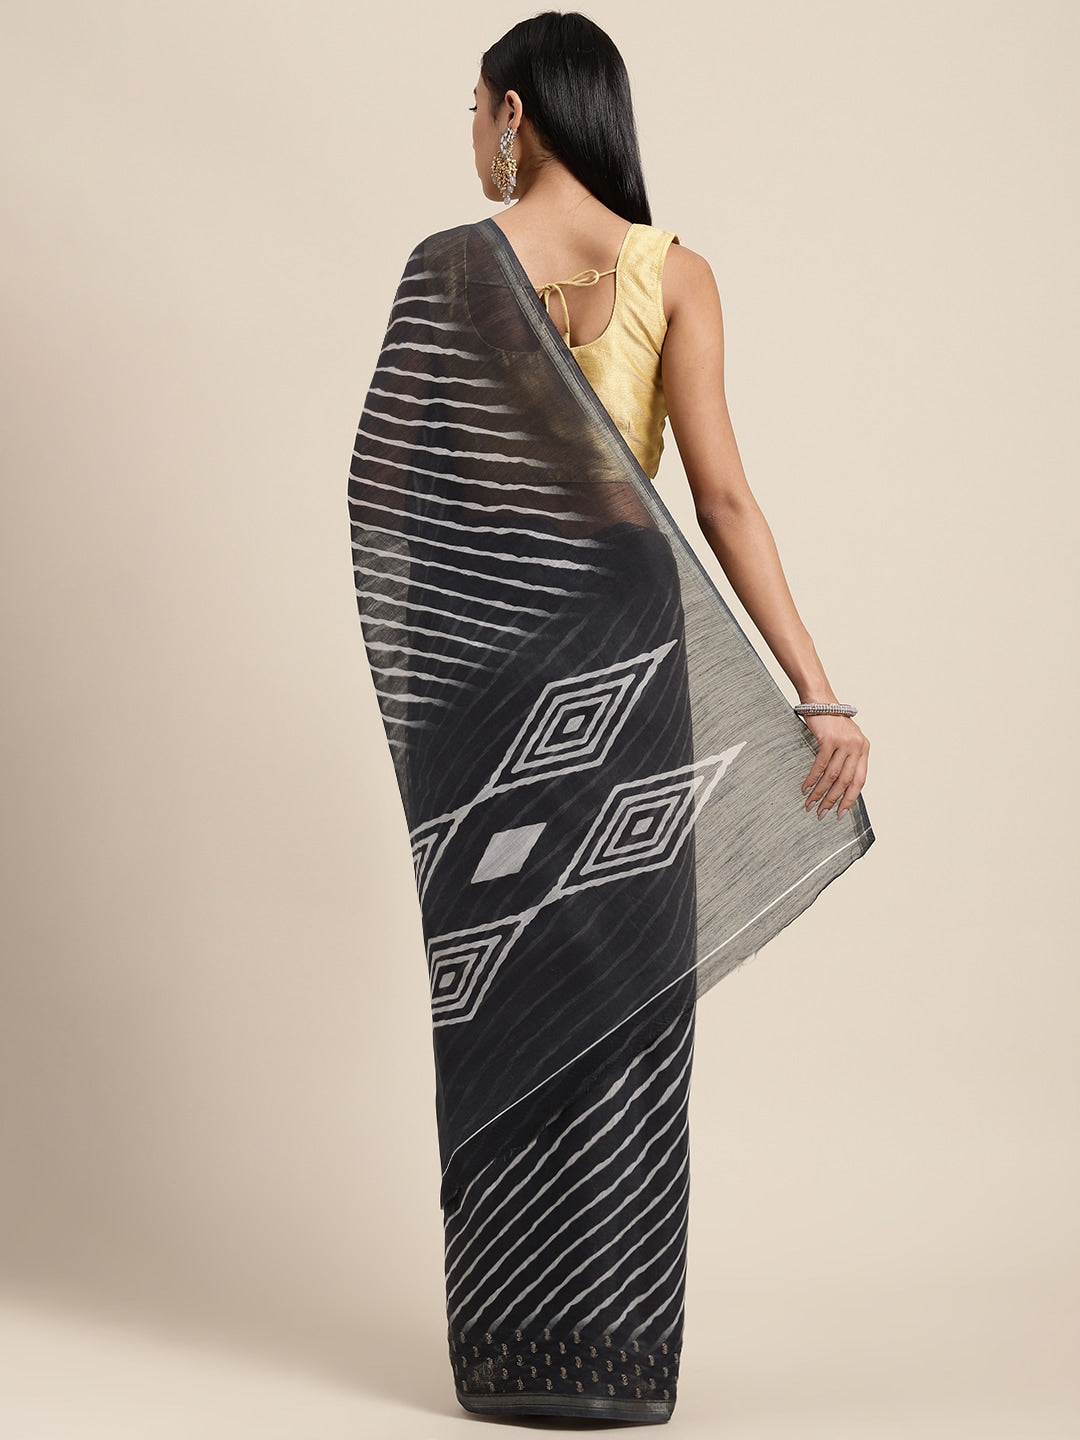 Neeru's black color, dupion fabric saree